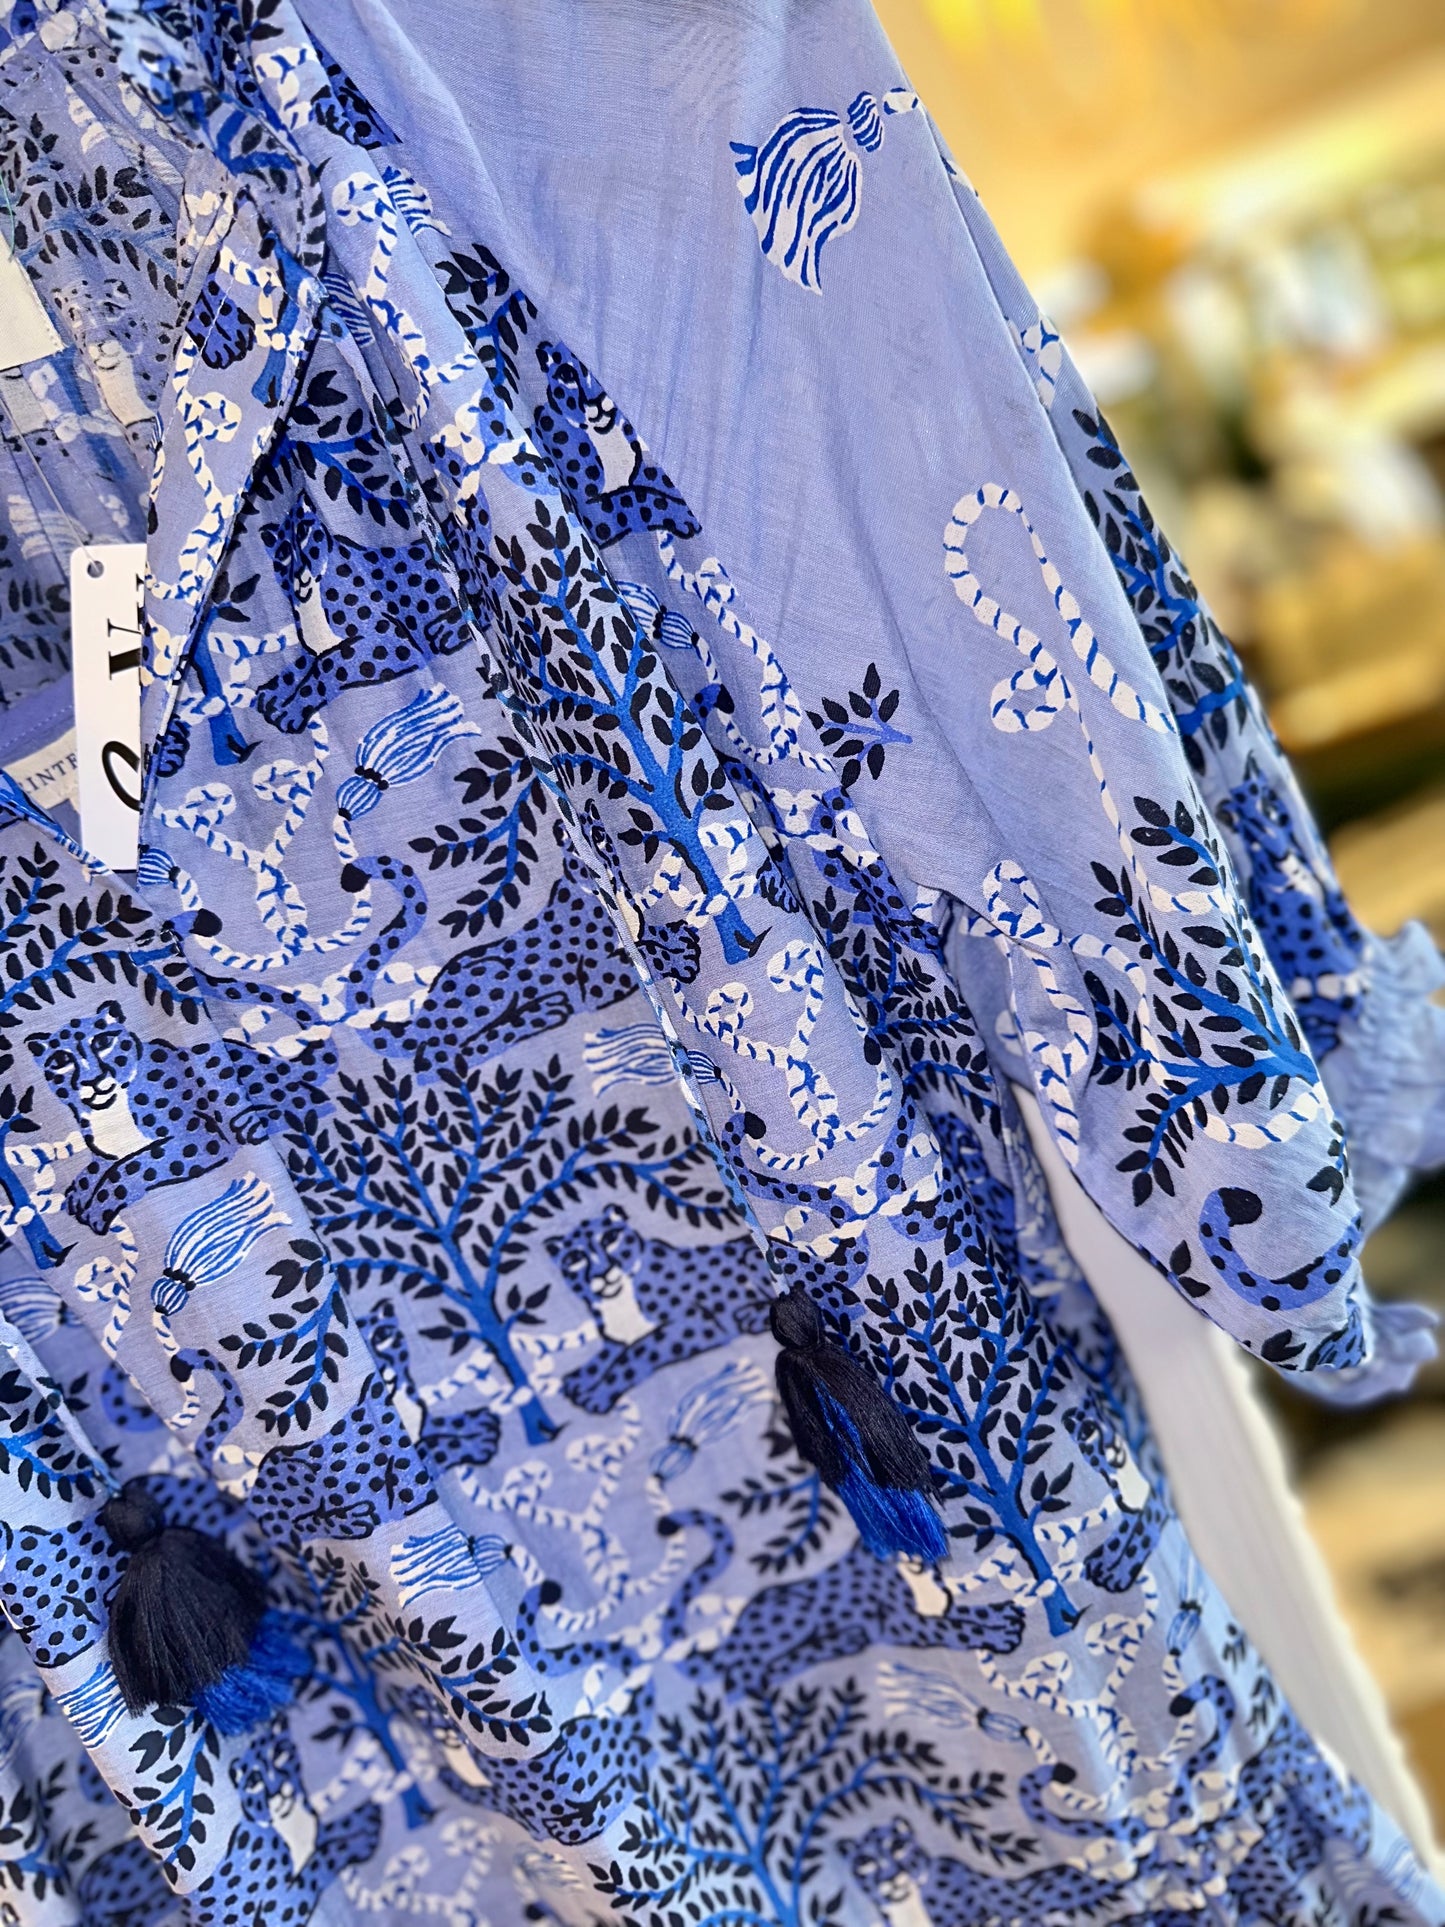 Vibrant Voyage Dress in charming cheetahs blue hibiscus by Printfresh